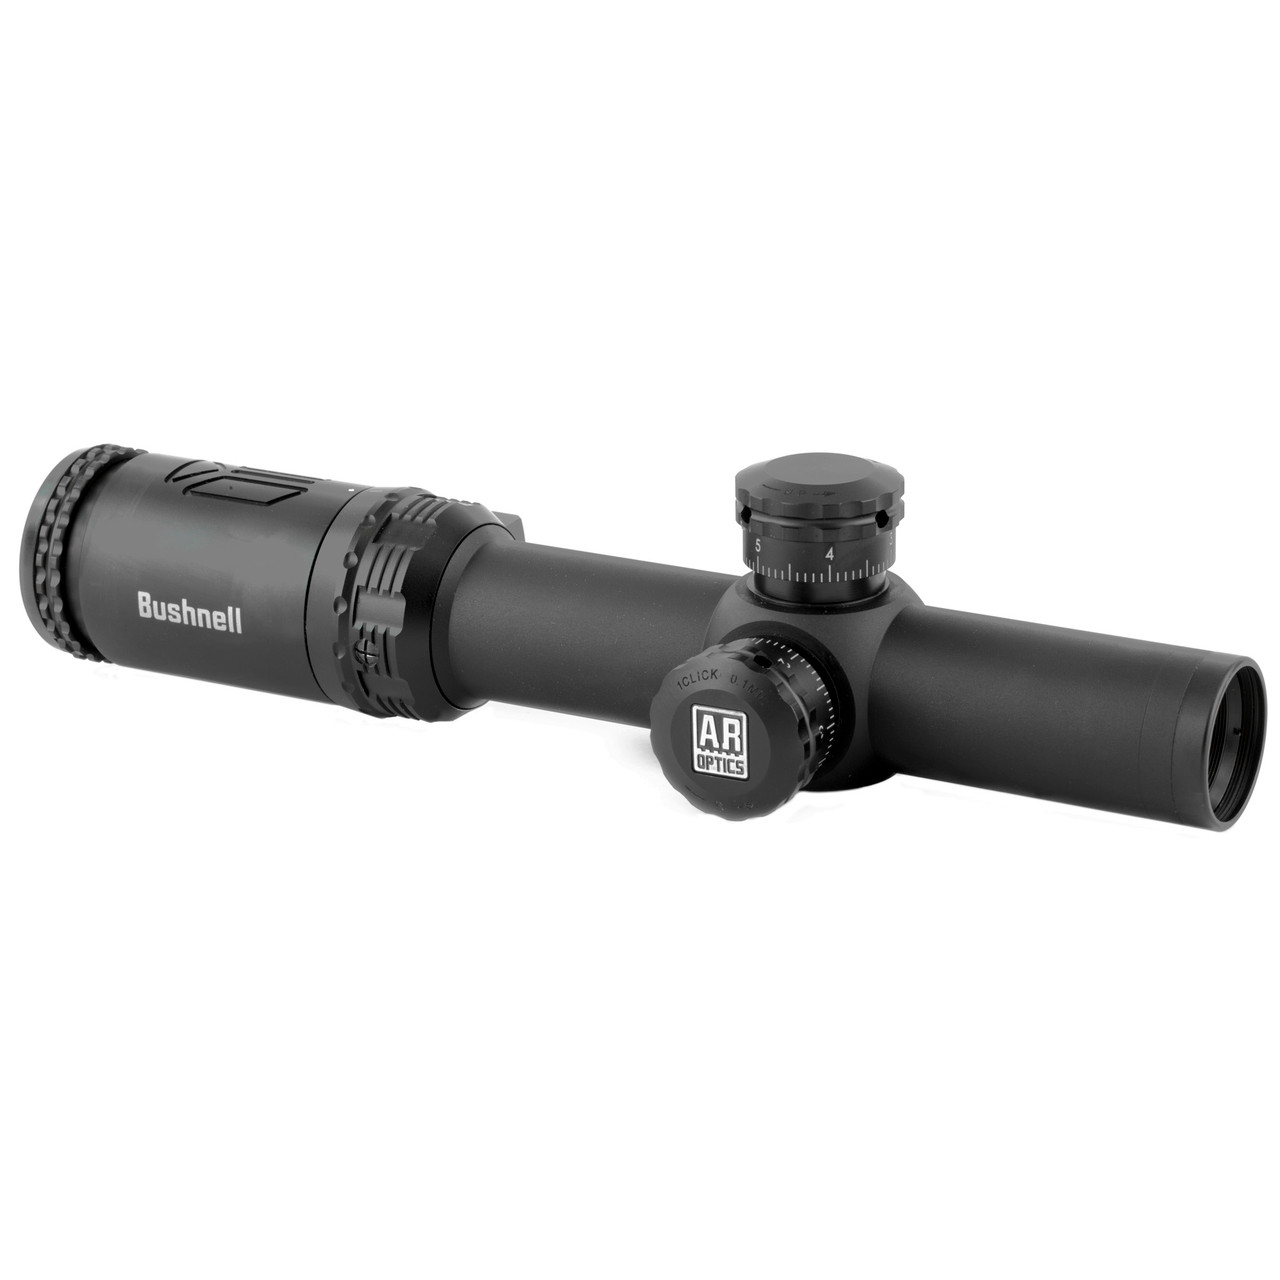 Bushnell AR71424 AR Optics, Rifle Scope, 1-4X24mm, Drop Zone 223 Reticle, Black Finish